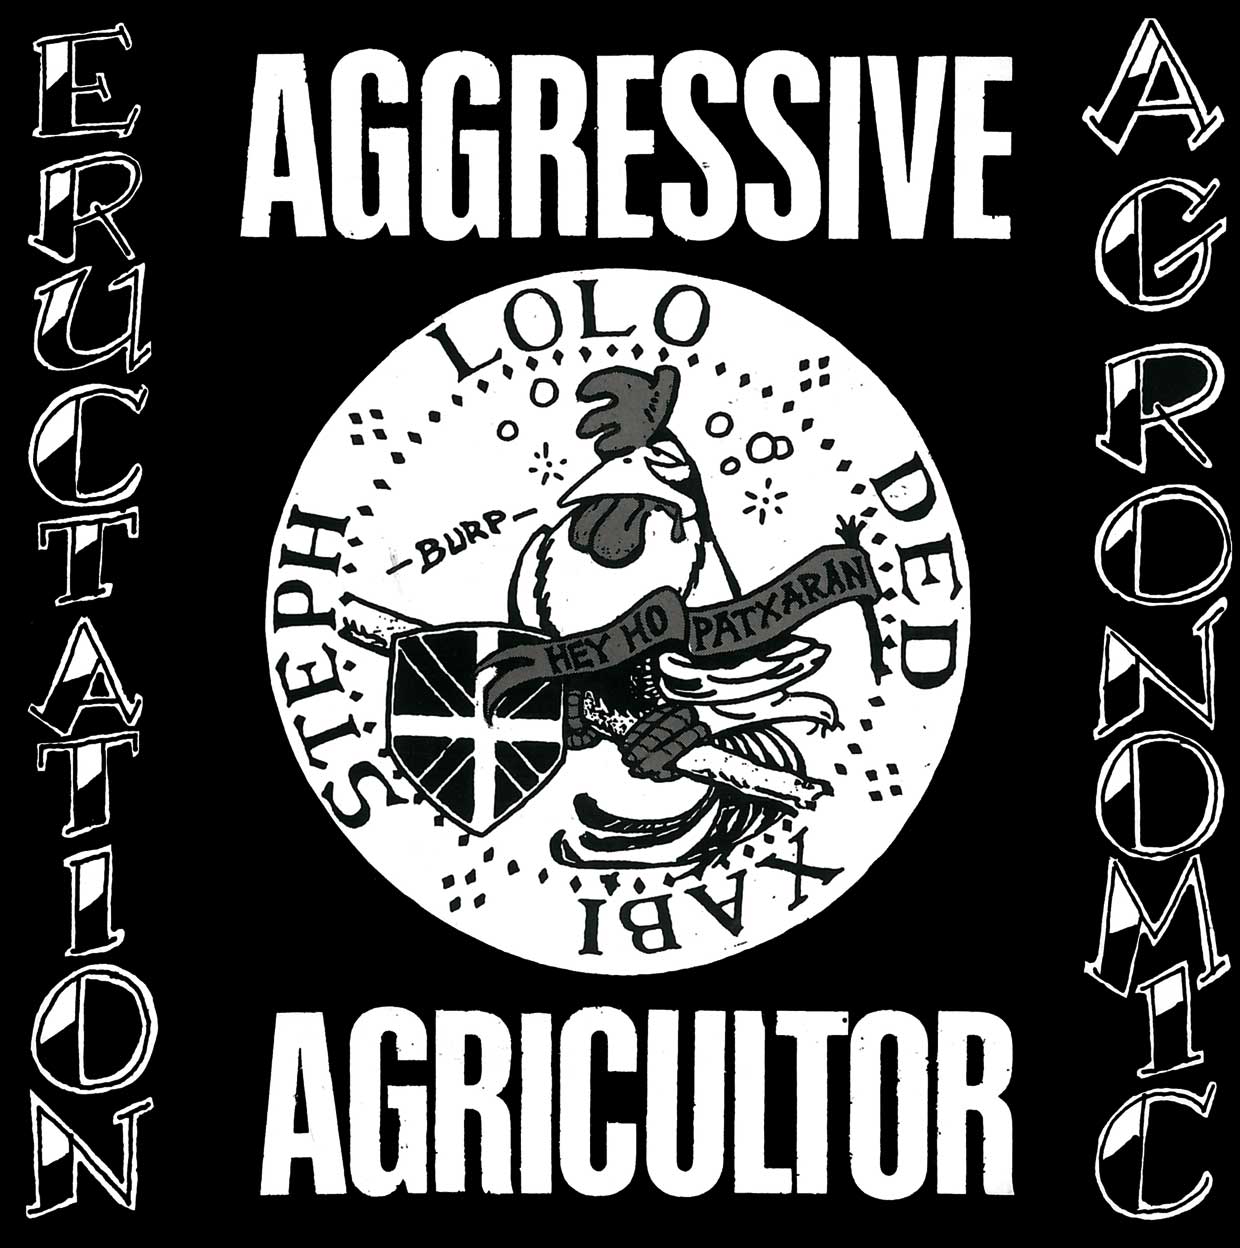 AGGRESSIVE AGRICULTOR "Eructation agronomic" - 33T